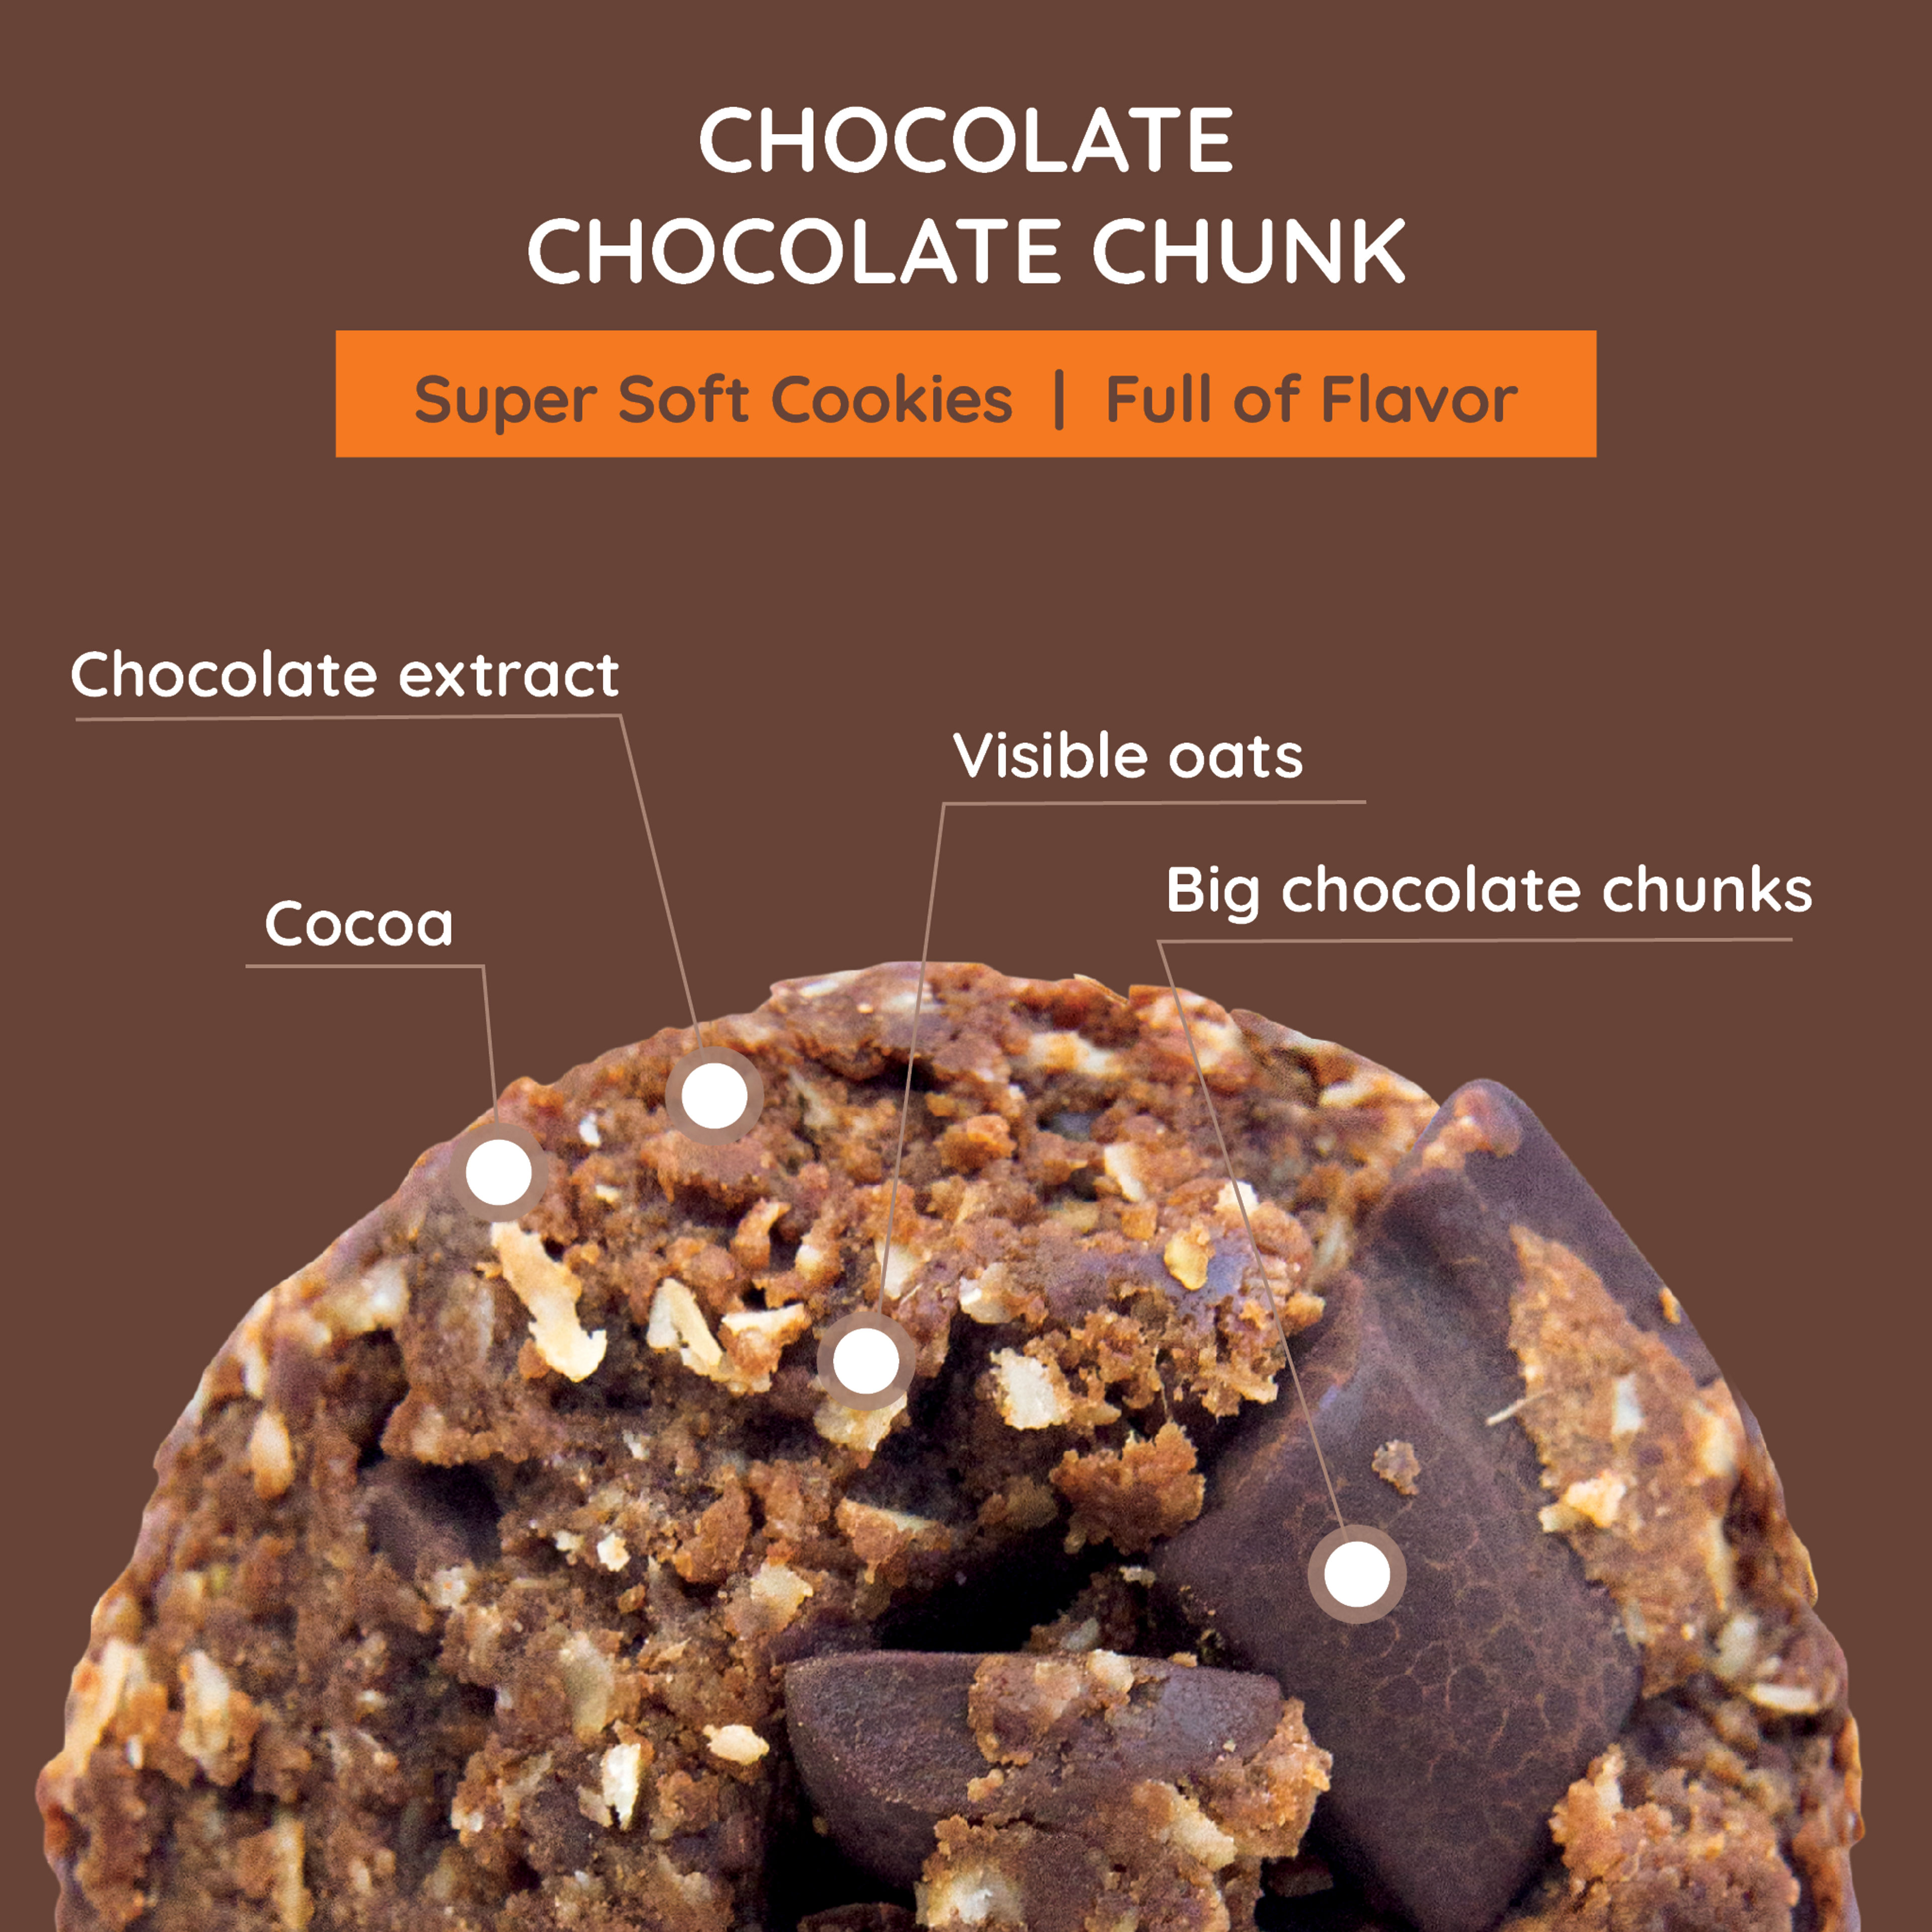 Chocolate Chocolate Chunk